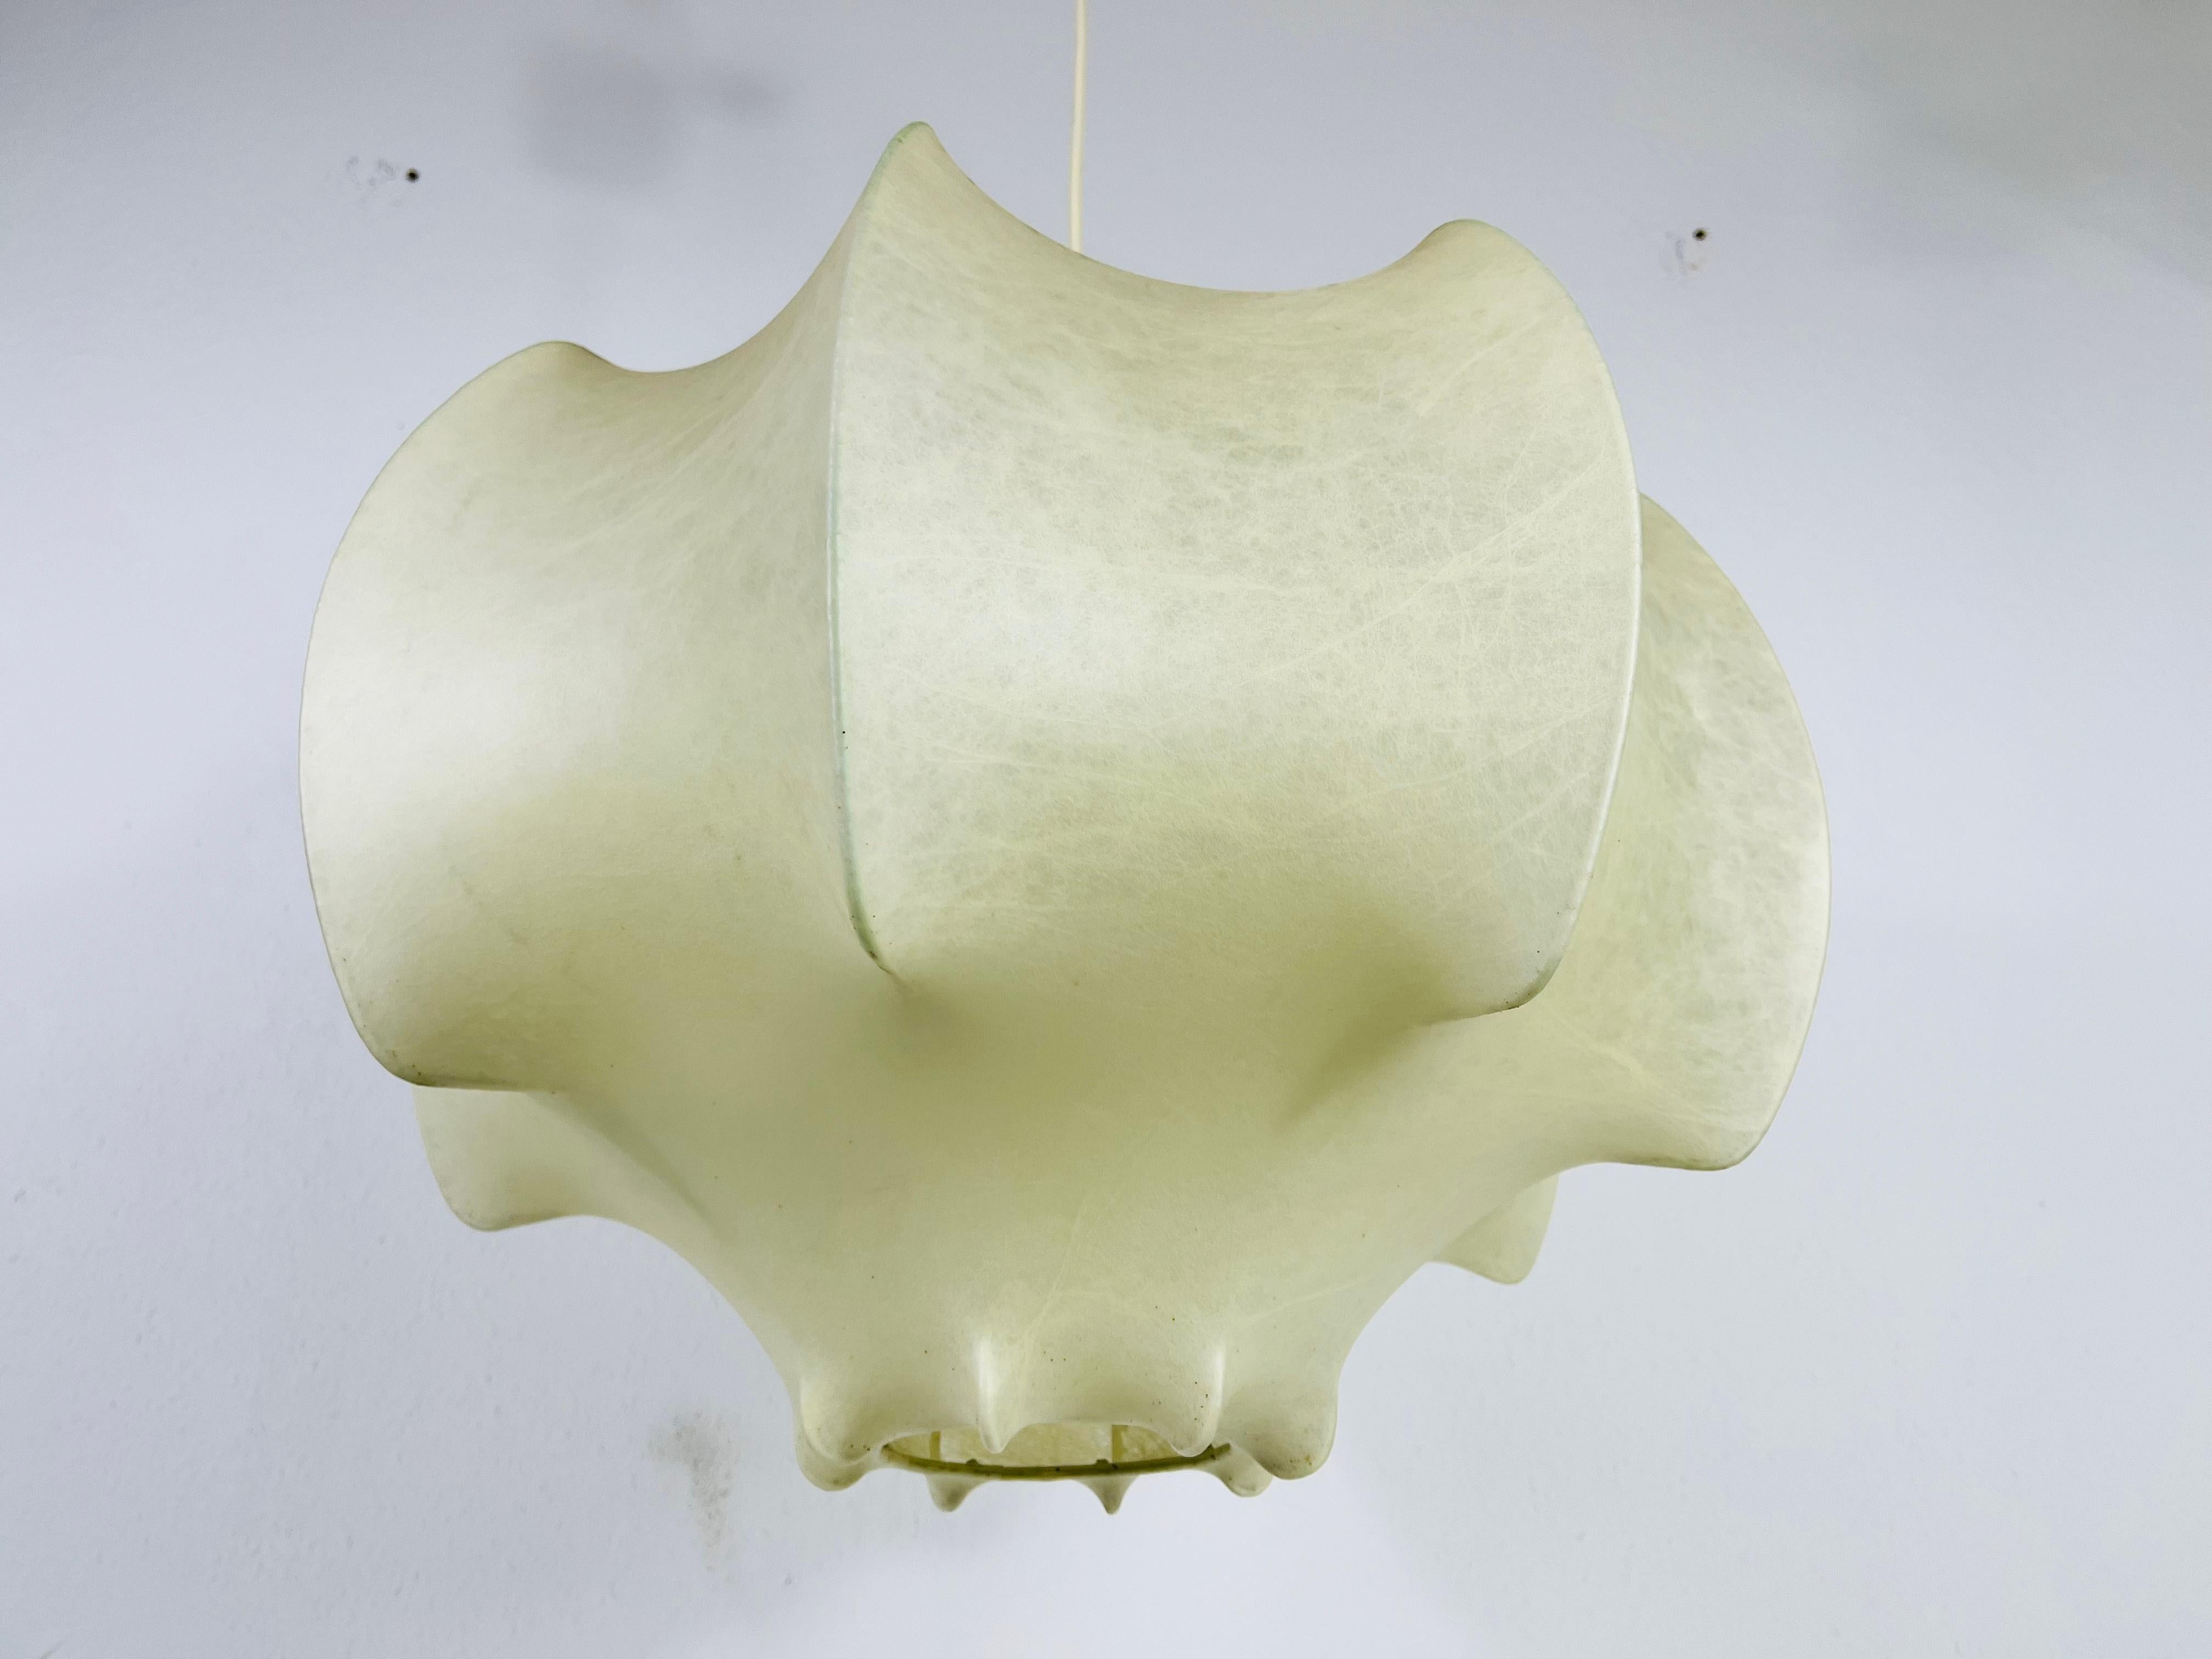 European Viscontea Cocoon Pendant Light by Achille and Pier Giacomo Castiglioni for Flos